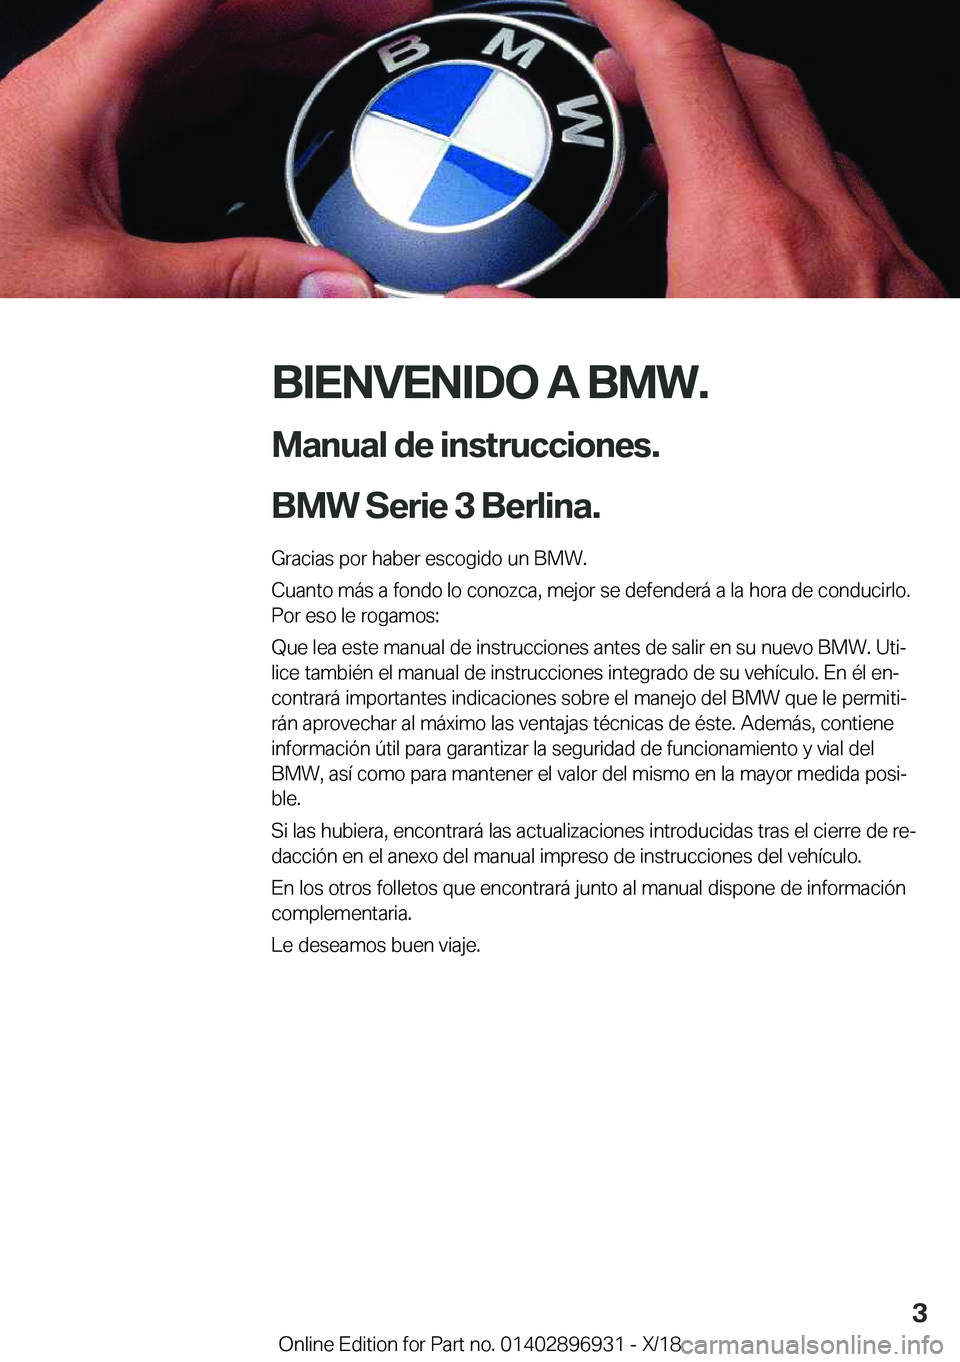 BMW 3 SERIES 2019  Manuales de Empleo (in Spanish) �B�I�E�N�V�E�N�I�D�O��A��B�M�W�.
�M�a�n�u�a�l��d�e��i�n�s�t�r�u�c�c�i�o�n�e�s�.
�B�M�W��S�e�r�i�e��3��B�e�r�l�i�n�a�. �G�r�a�c�i�a�s��p�o�r��h�a�b�e�r��e�s�c�o�g�i�d�o��u�n��B�M�W�.
�C�u�a